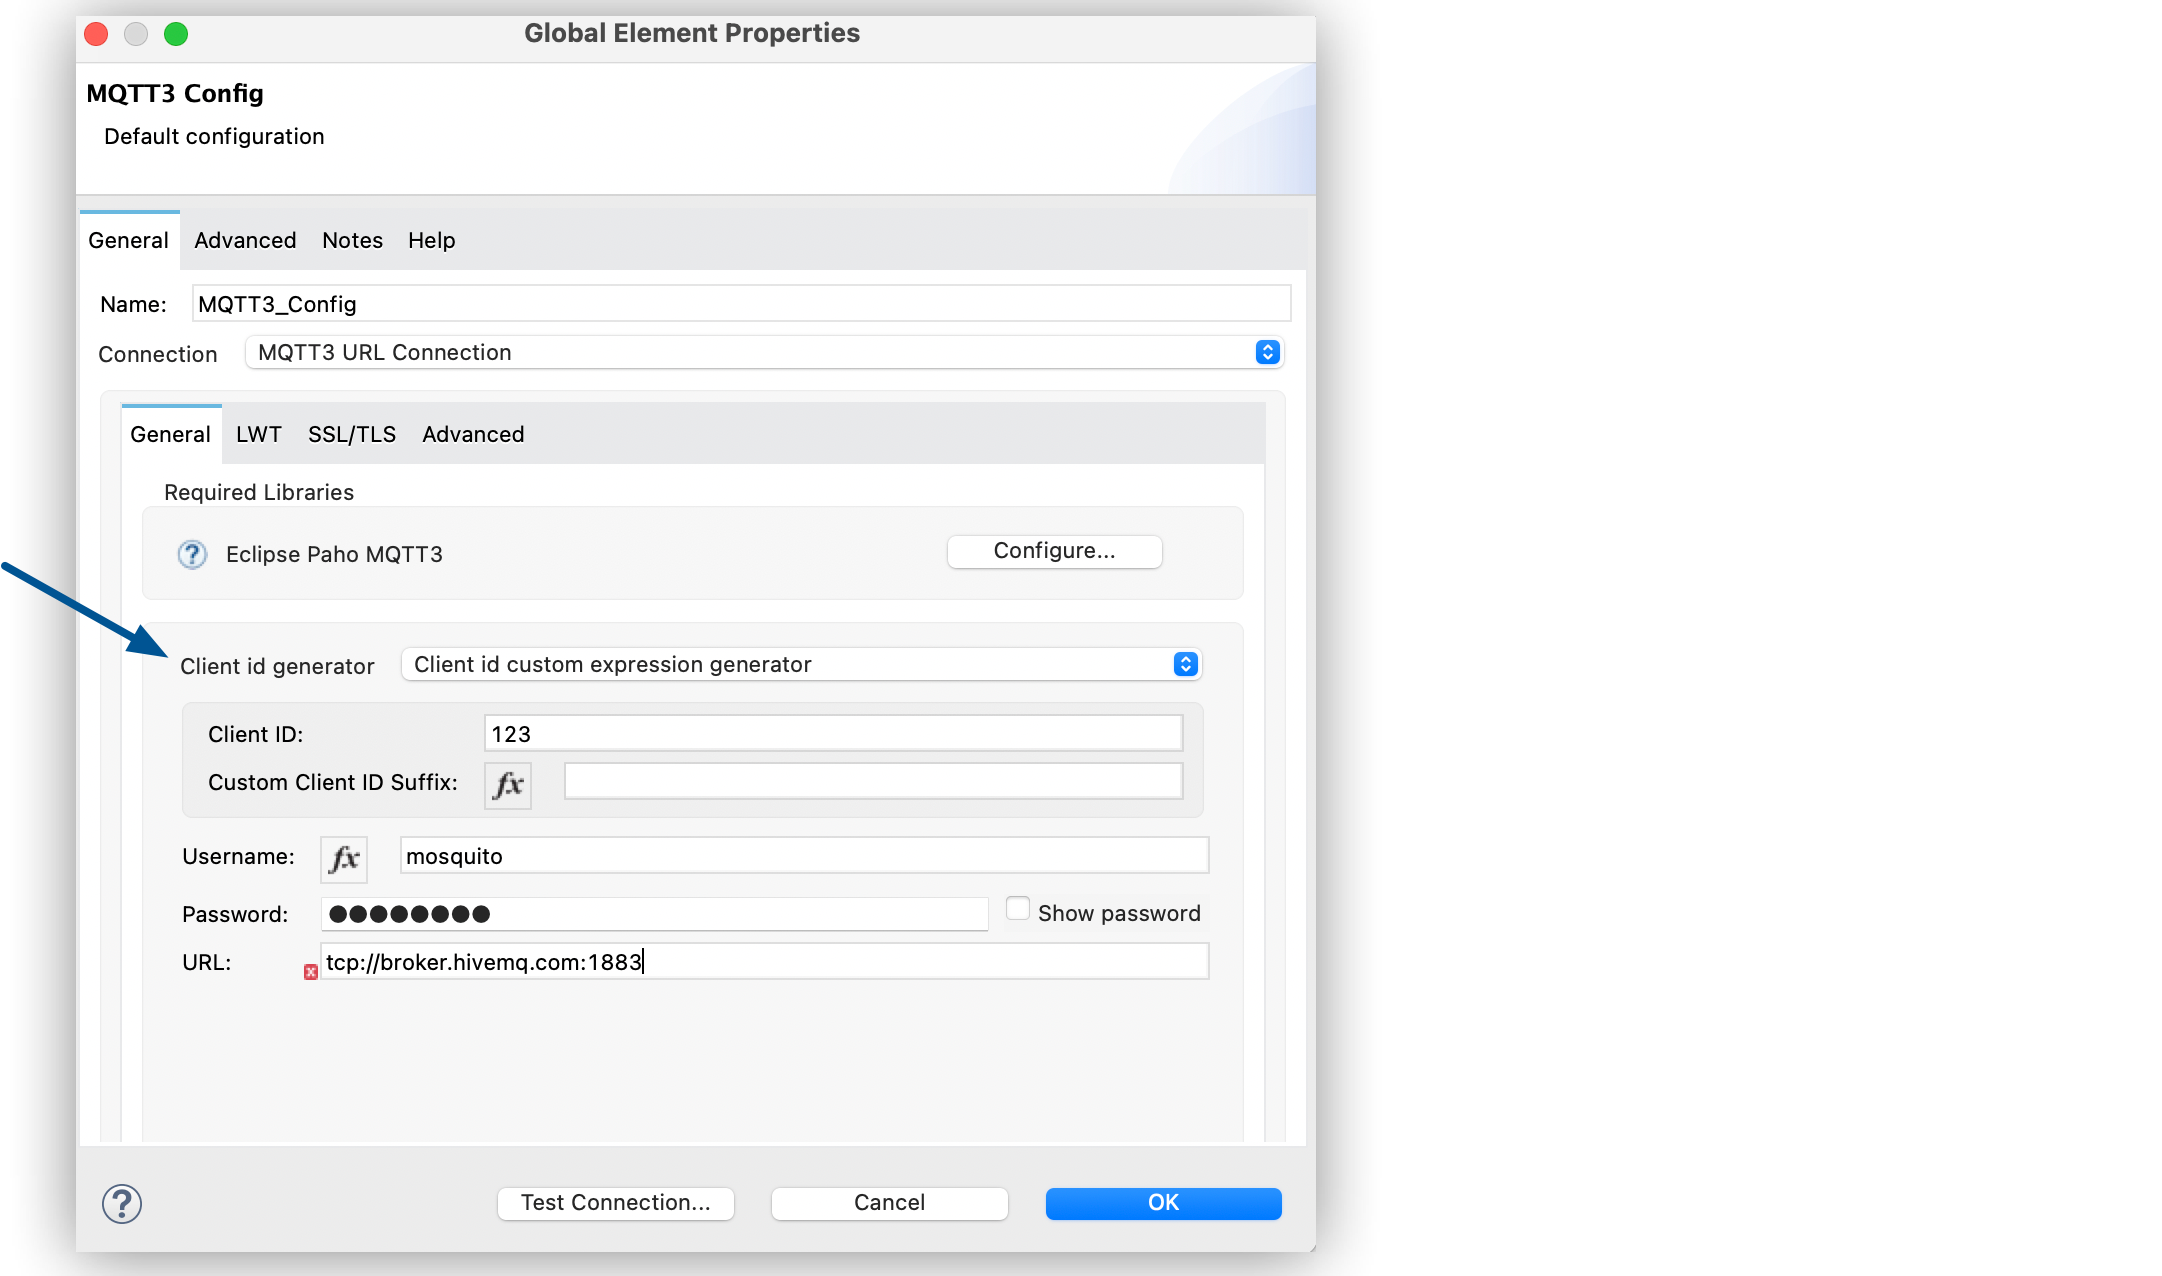 Custom Client ID Generator configuration in Global Element Properties window